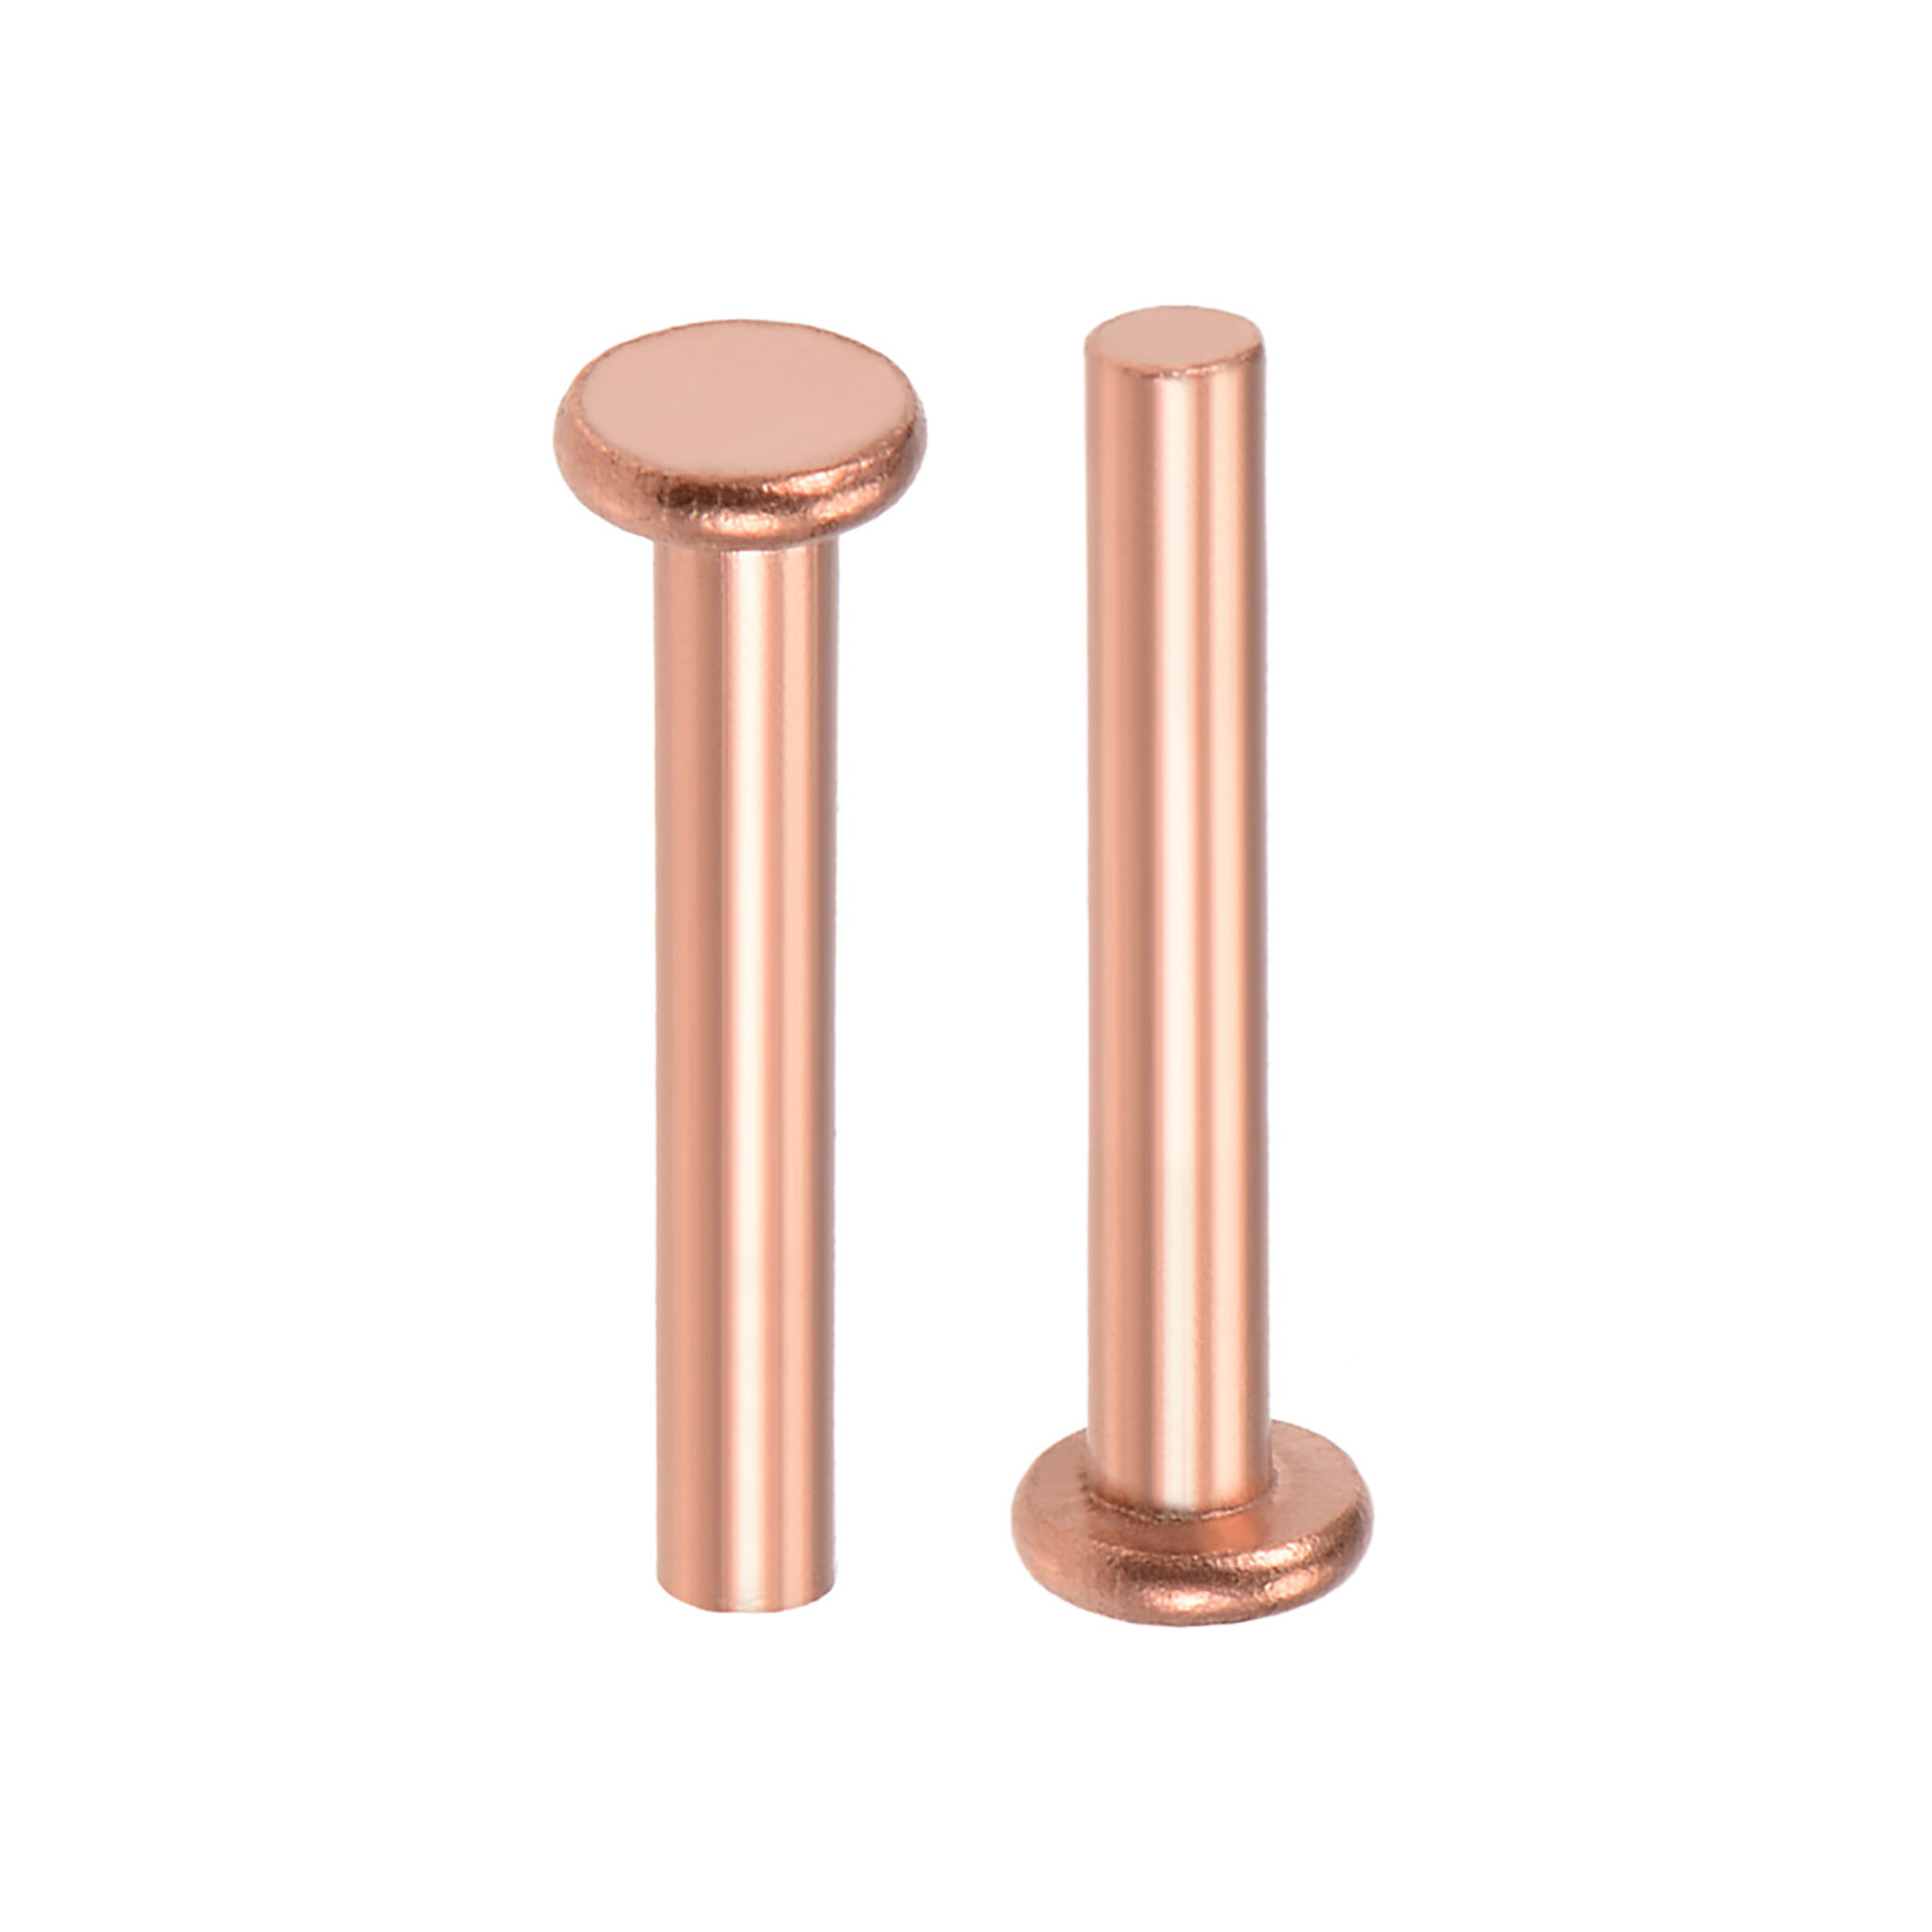 M5 M6 M8 Solid Copper Pan/Round Button Head Rivets Fasteners Brass Rivet 